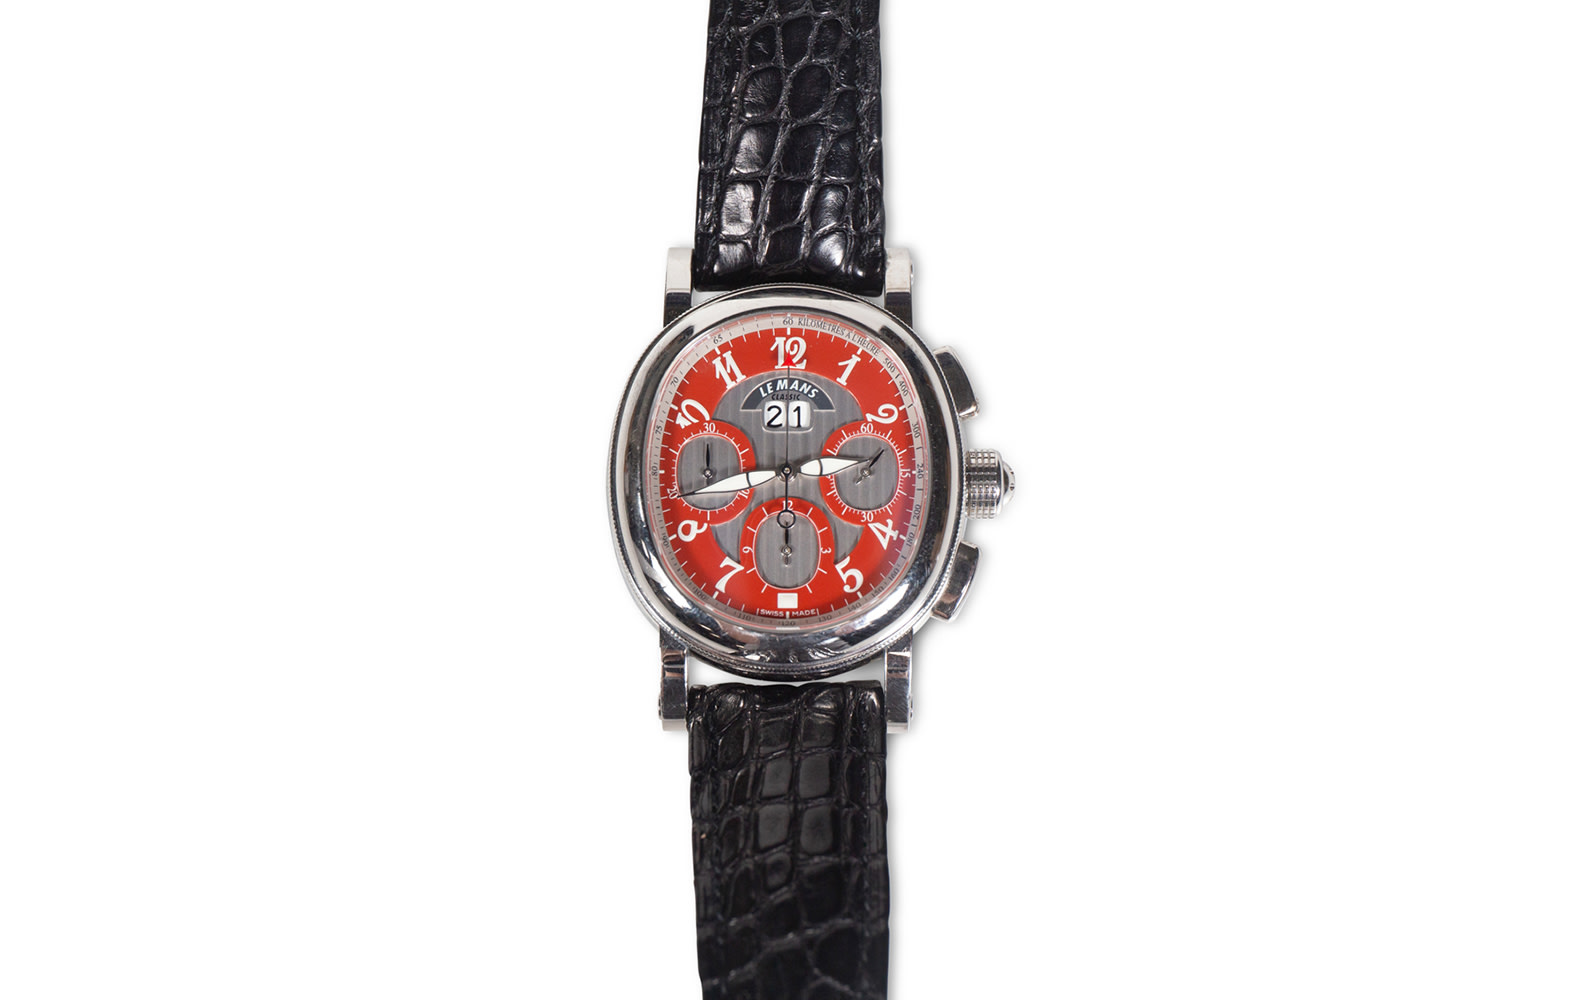  Le Mans Classic Automatic Wrist Watch